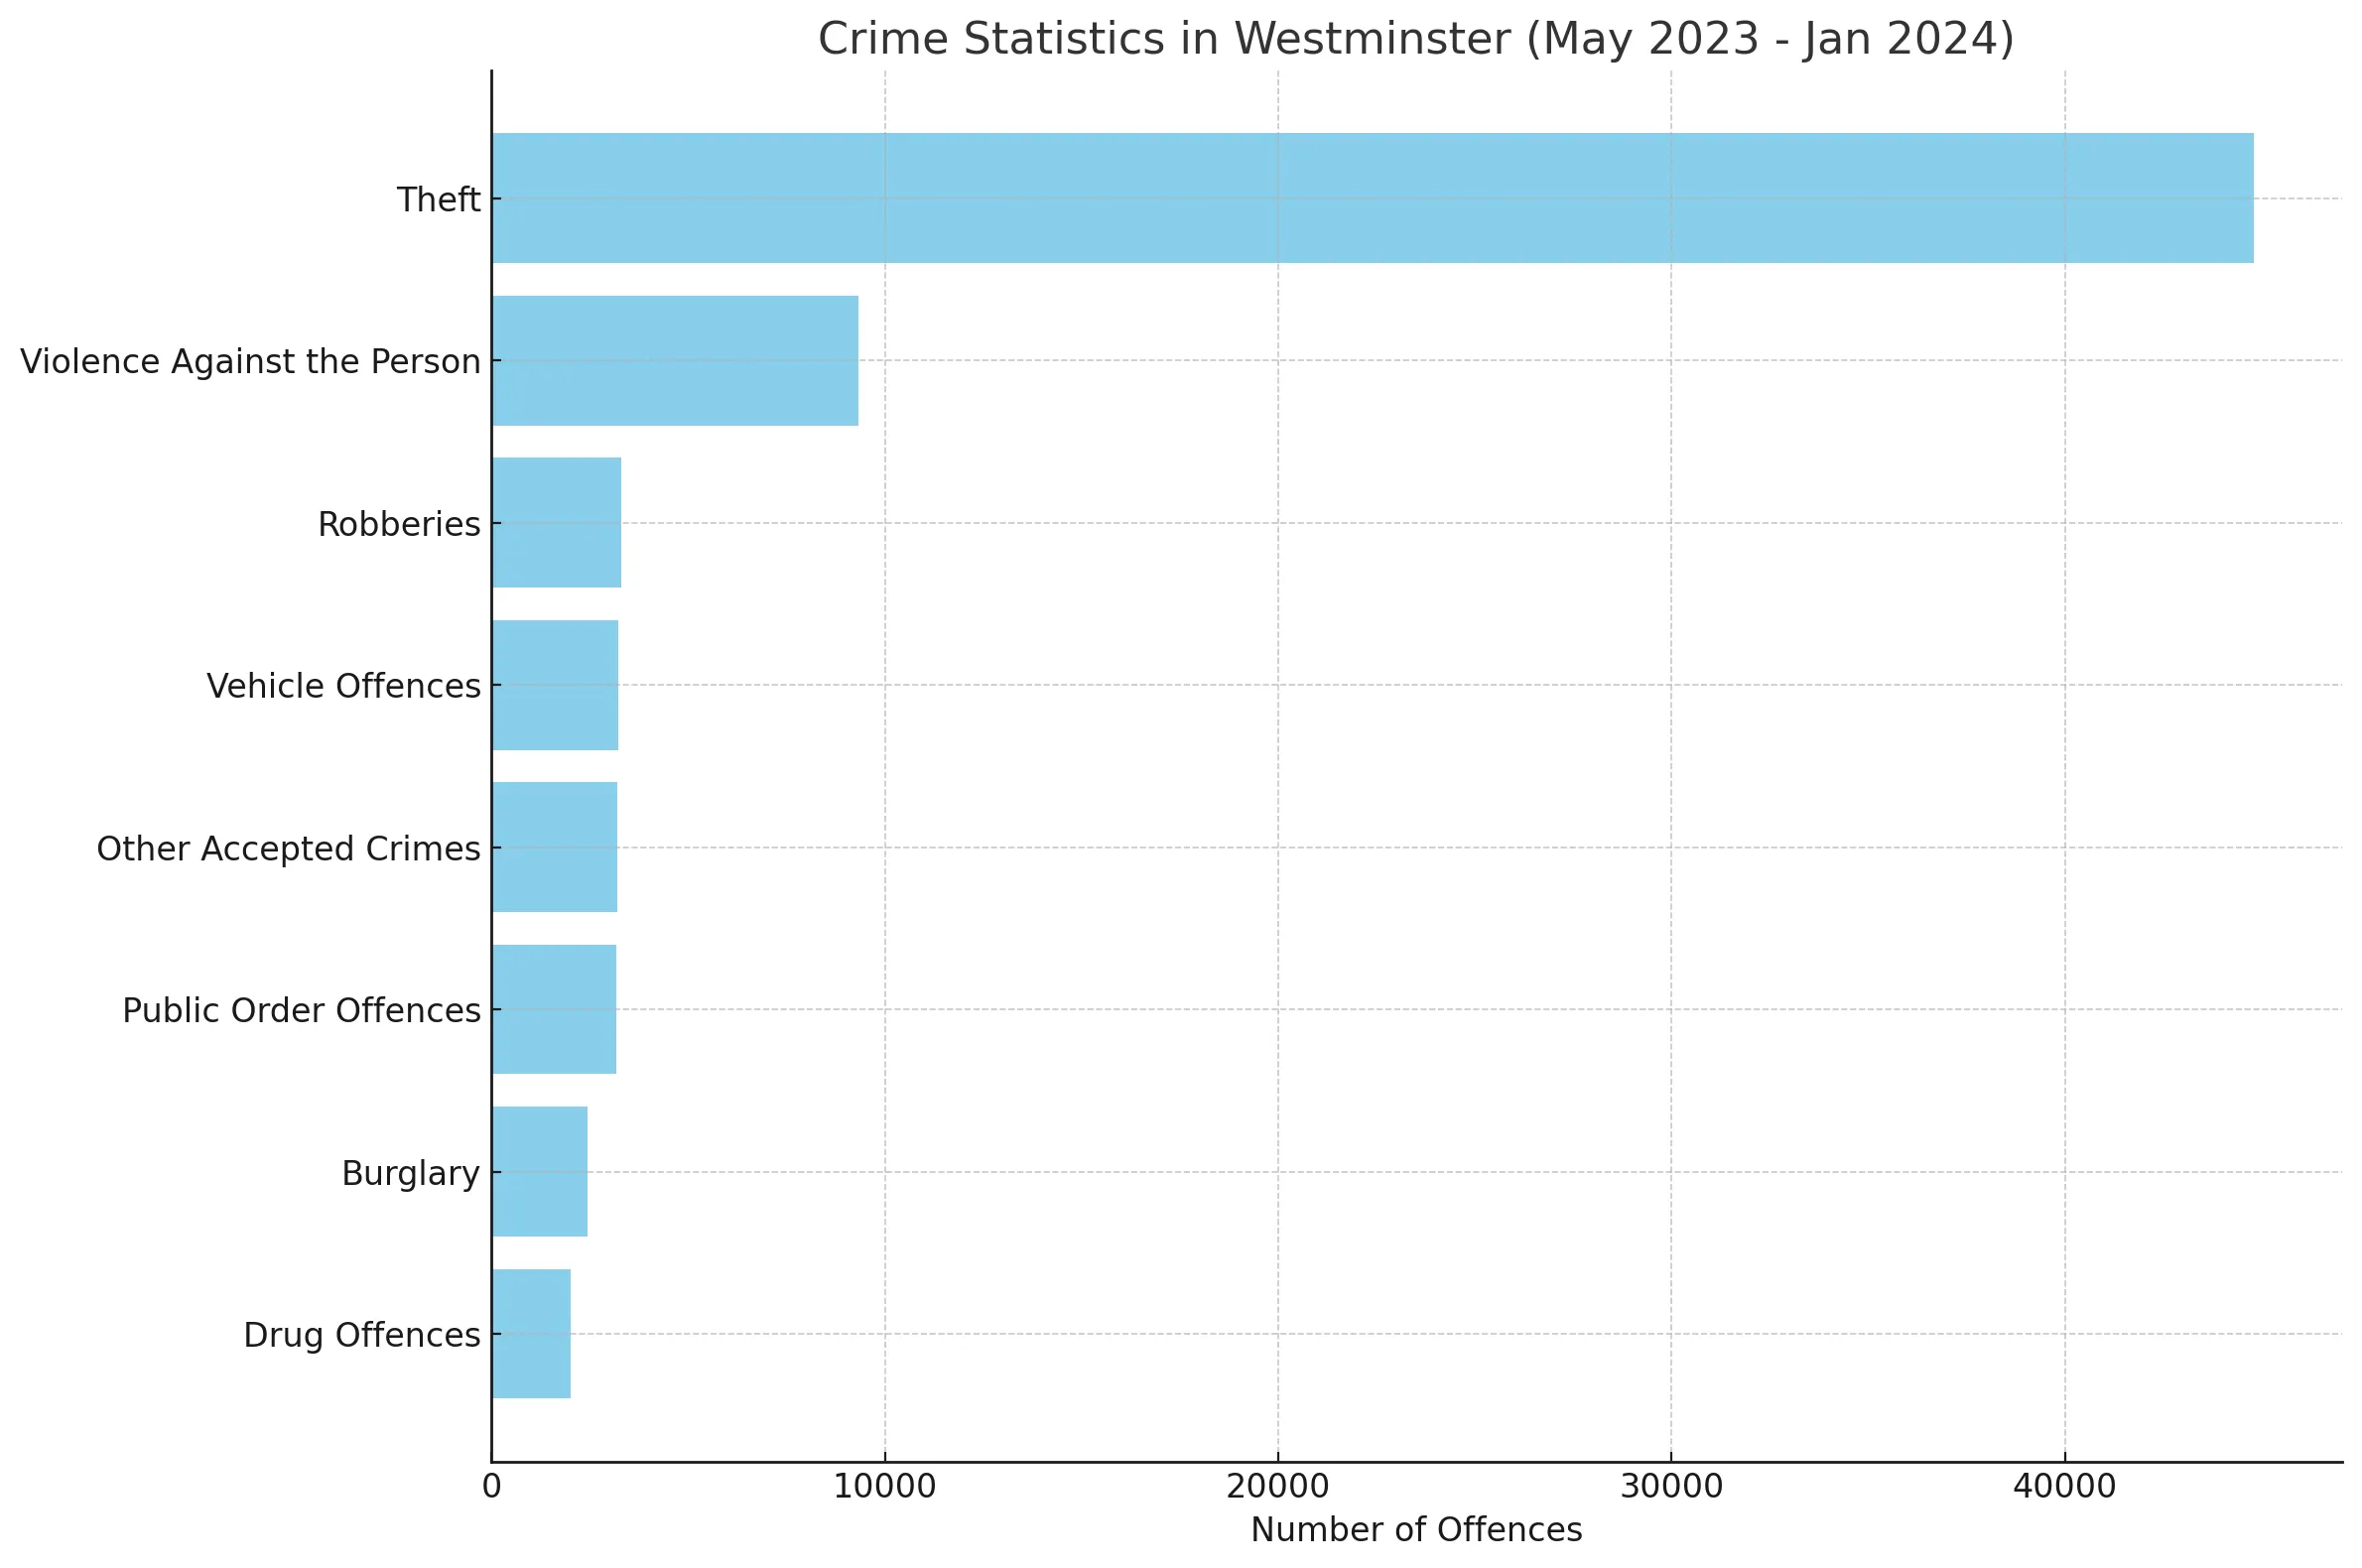 Bar chart titled "Crime Statistics in Westminster" shows number of arrested officers for various crimes.